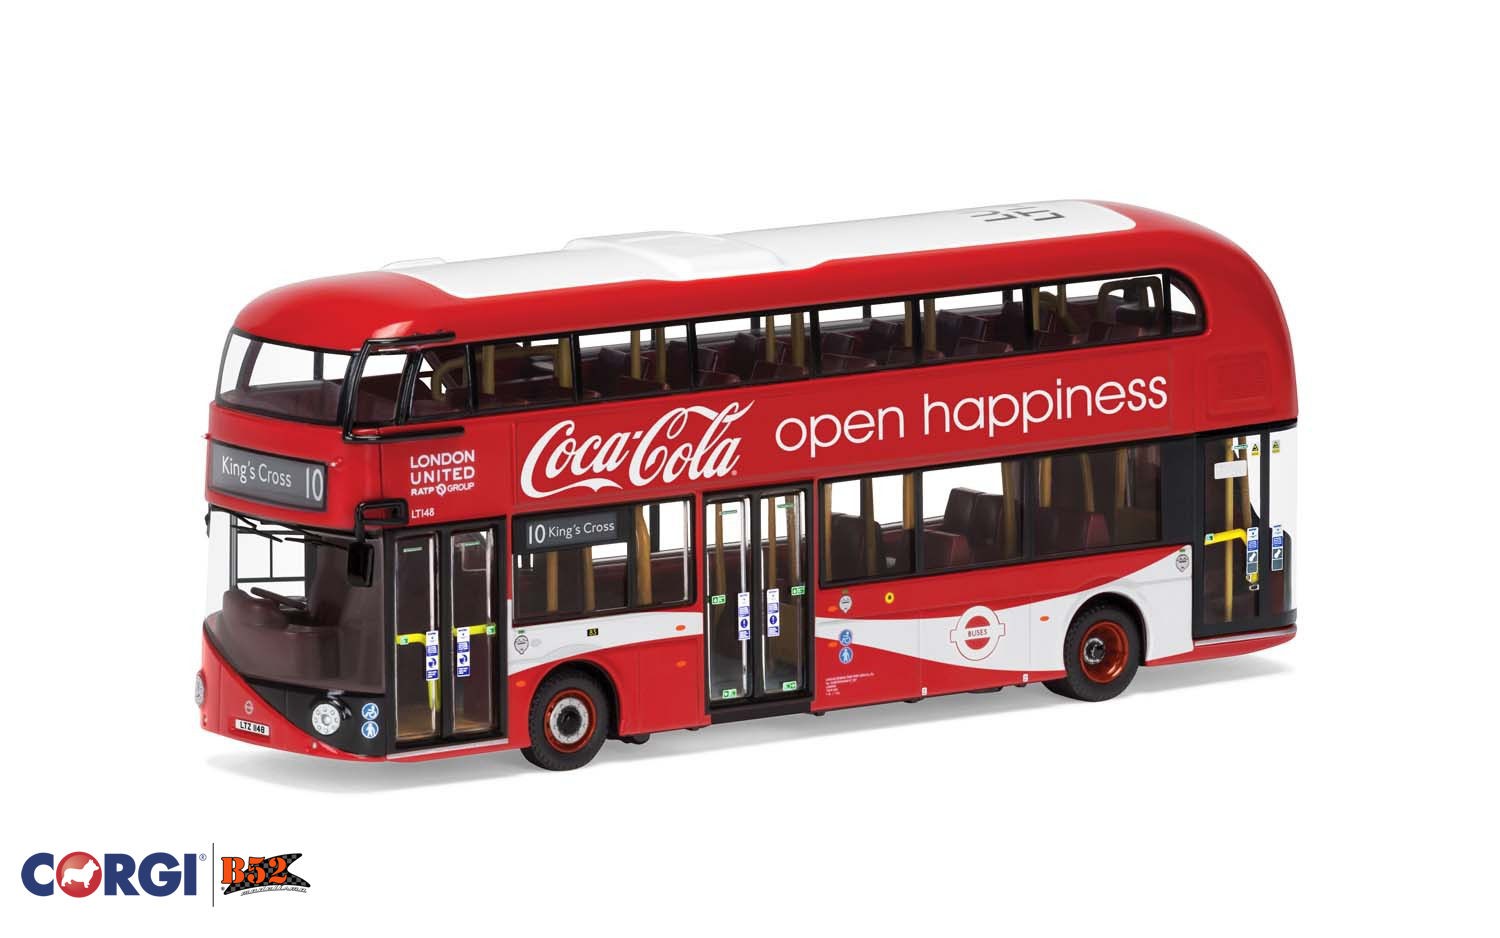 Corgi - Routemaster - London United, Coca-Cola®: OM46623